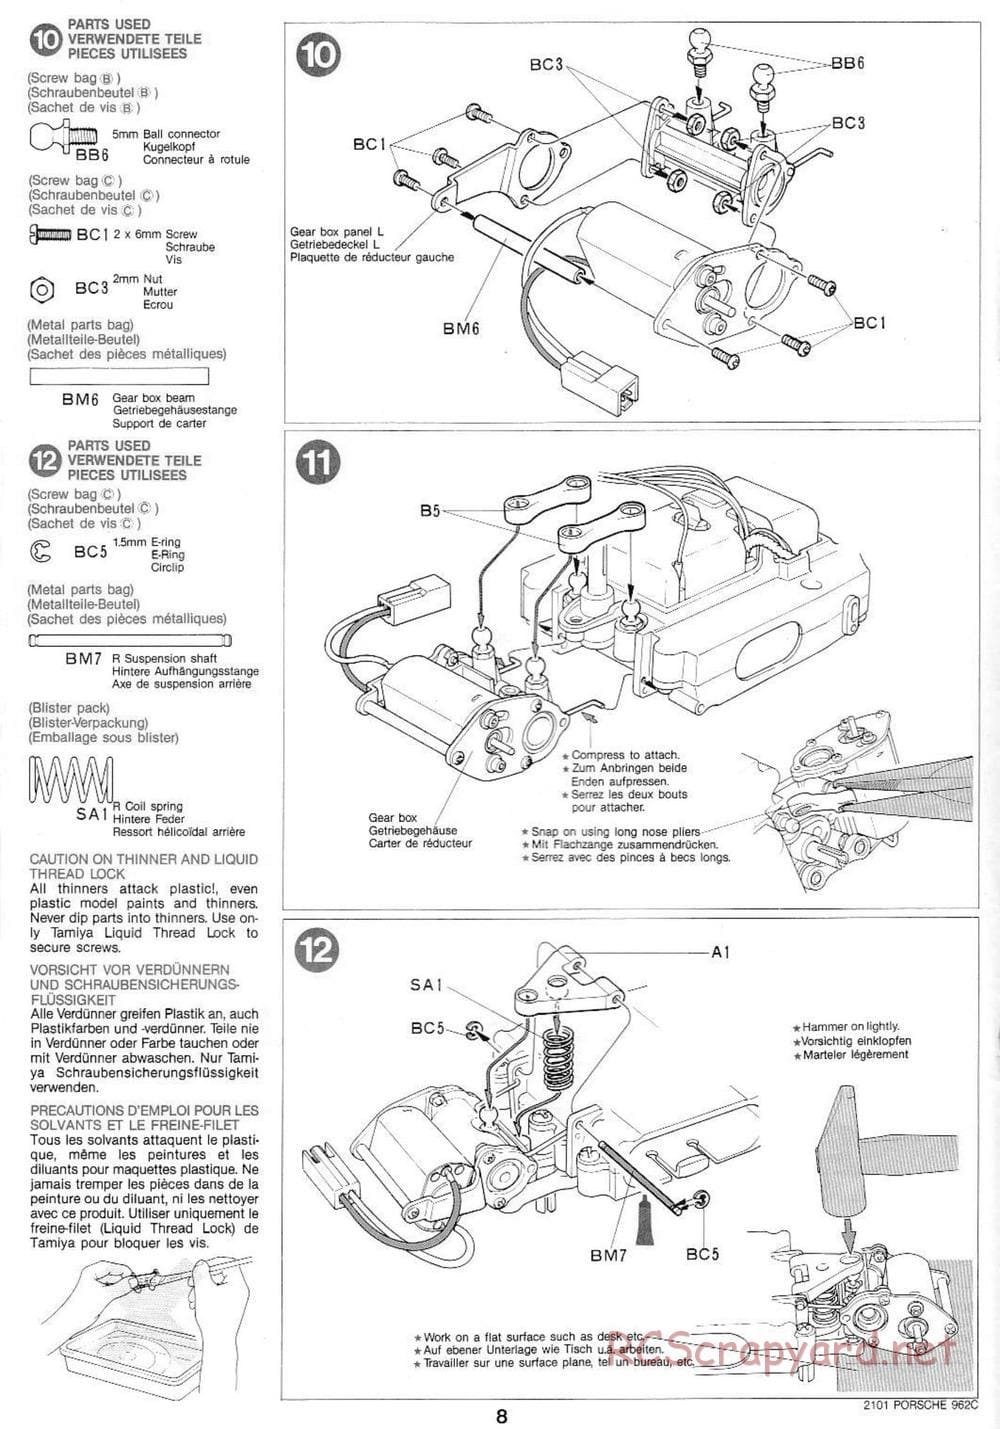 Tamiya - Tamtech - Porsche 962C Chassis - Manual - Page 8